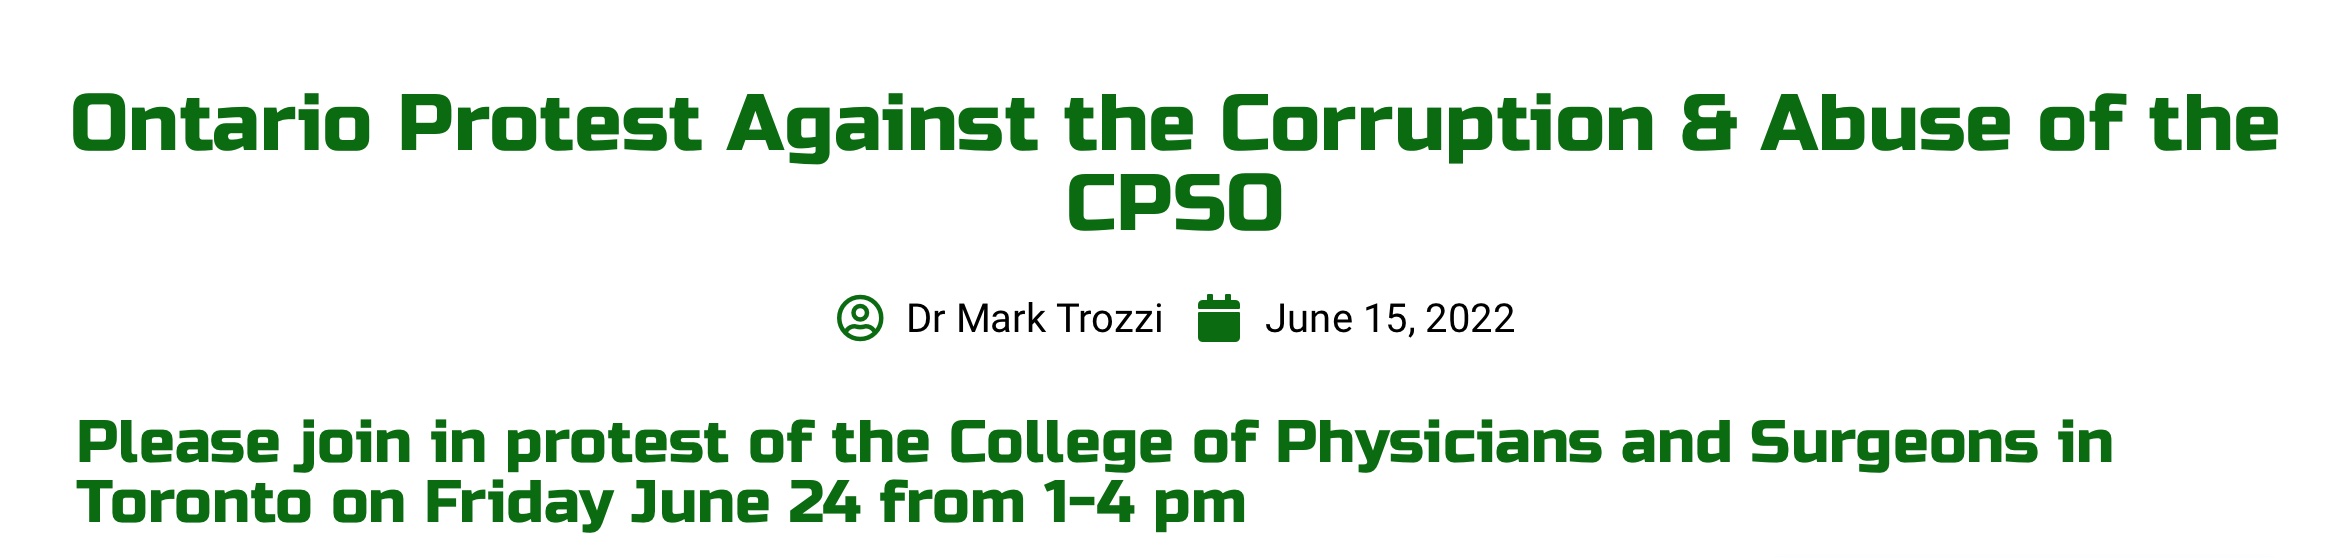 June 24 – Ontario Protest Against the Corruption & Abuse of the CPSOntario Protest Against the Corruption & Abuse of the CPSO